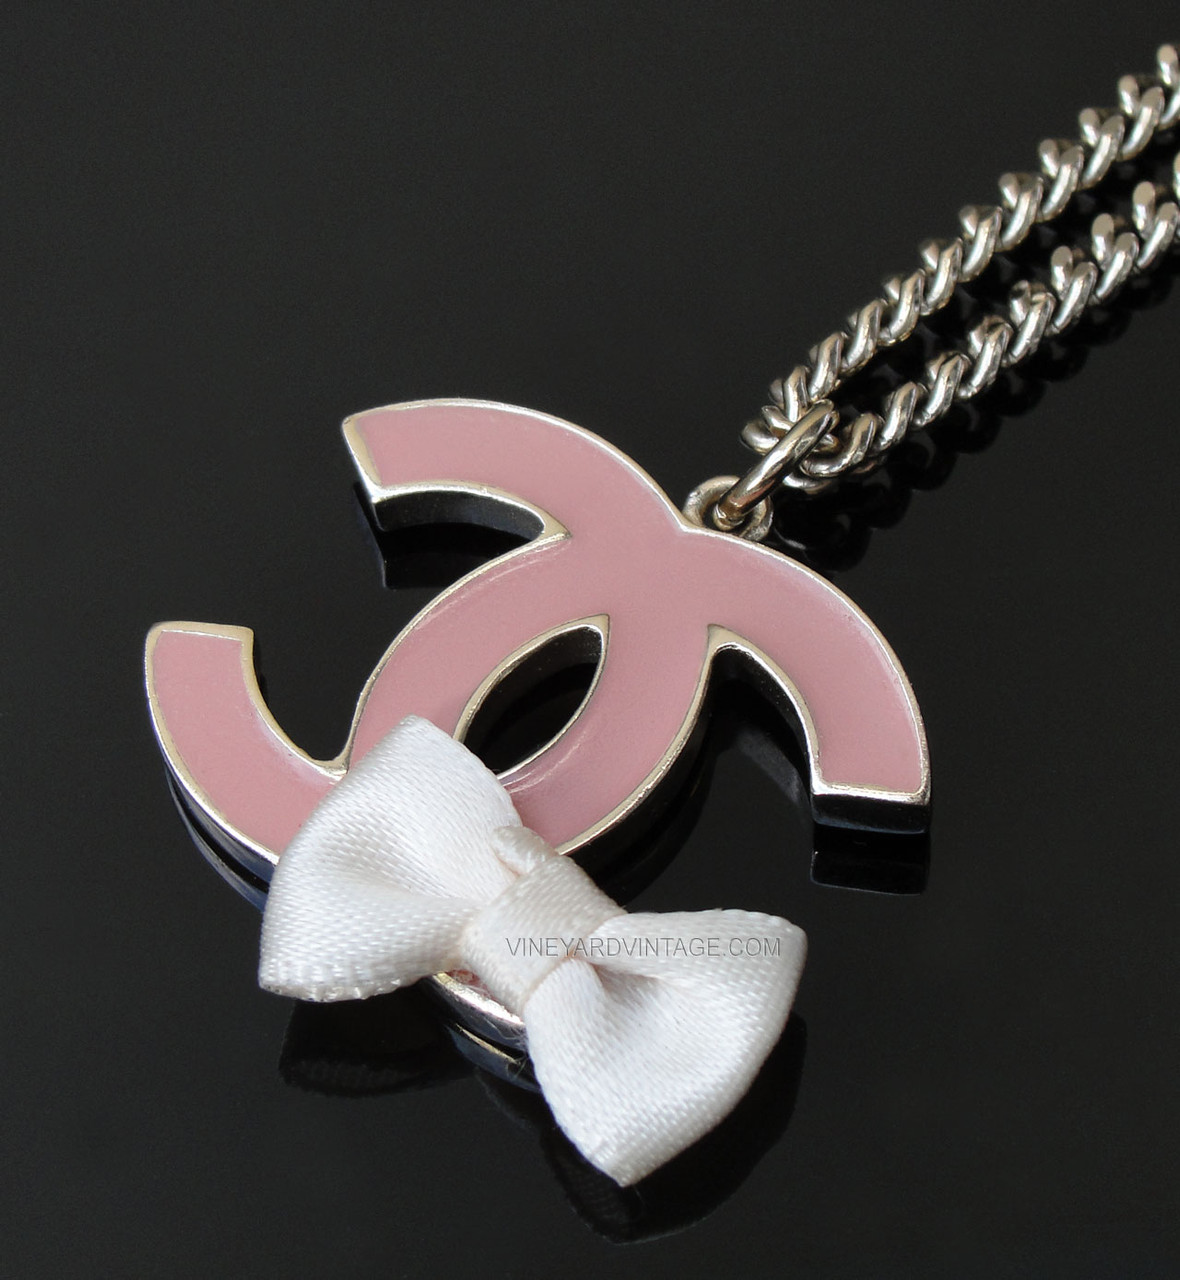 Chanel ribbon pearl choker - Gem